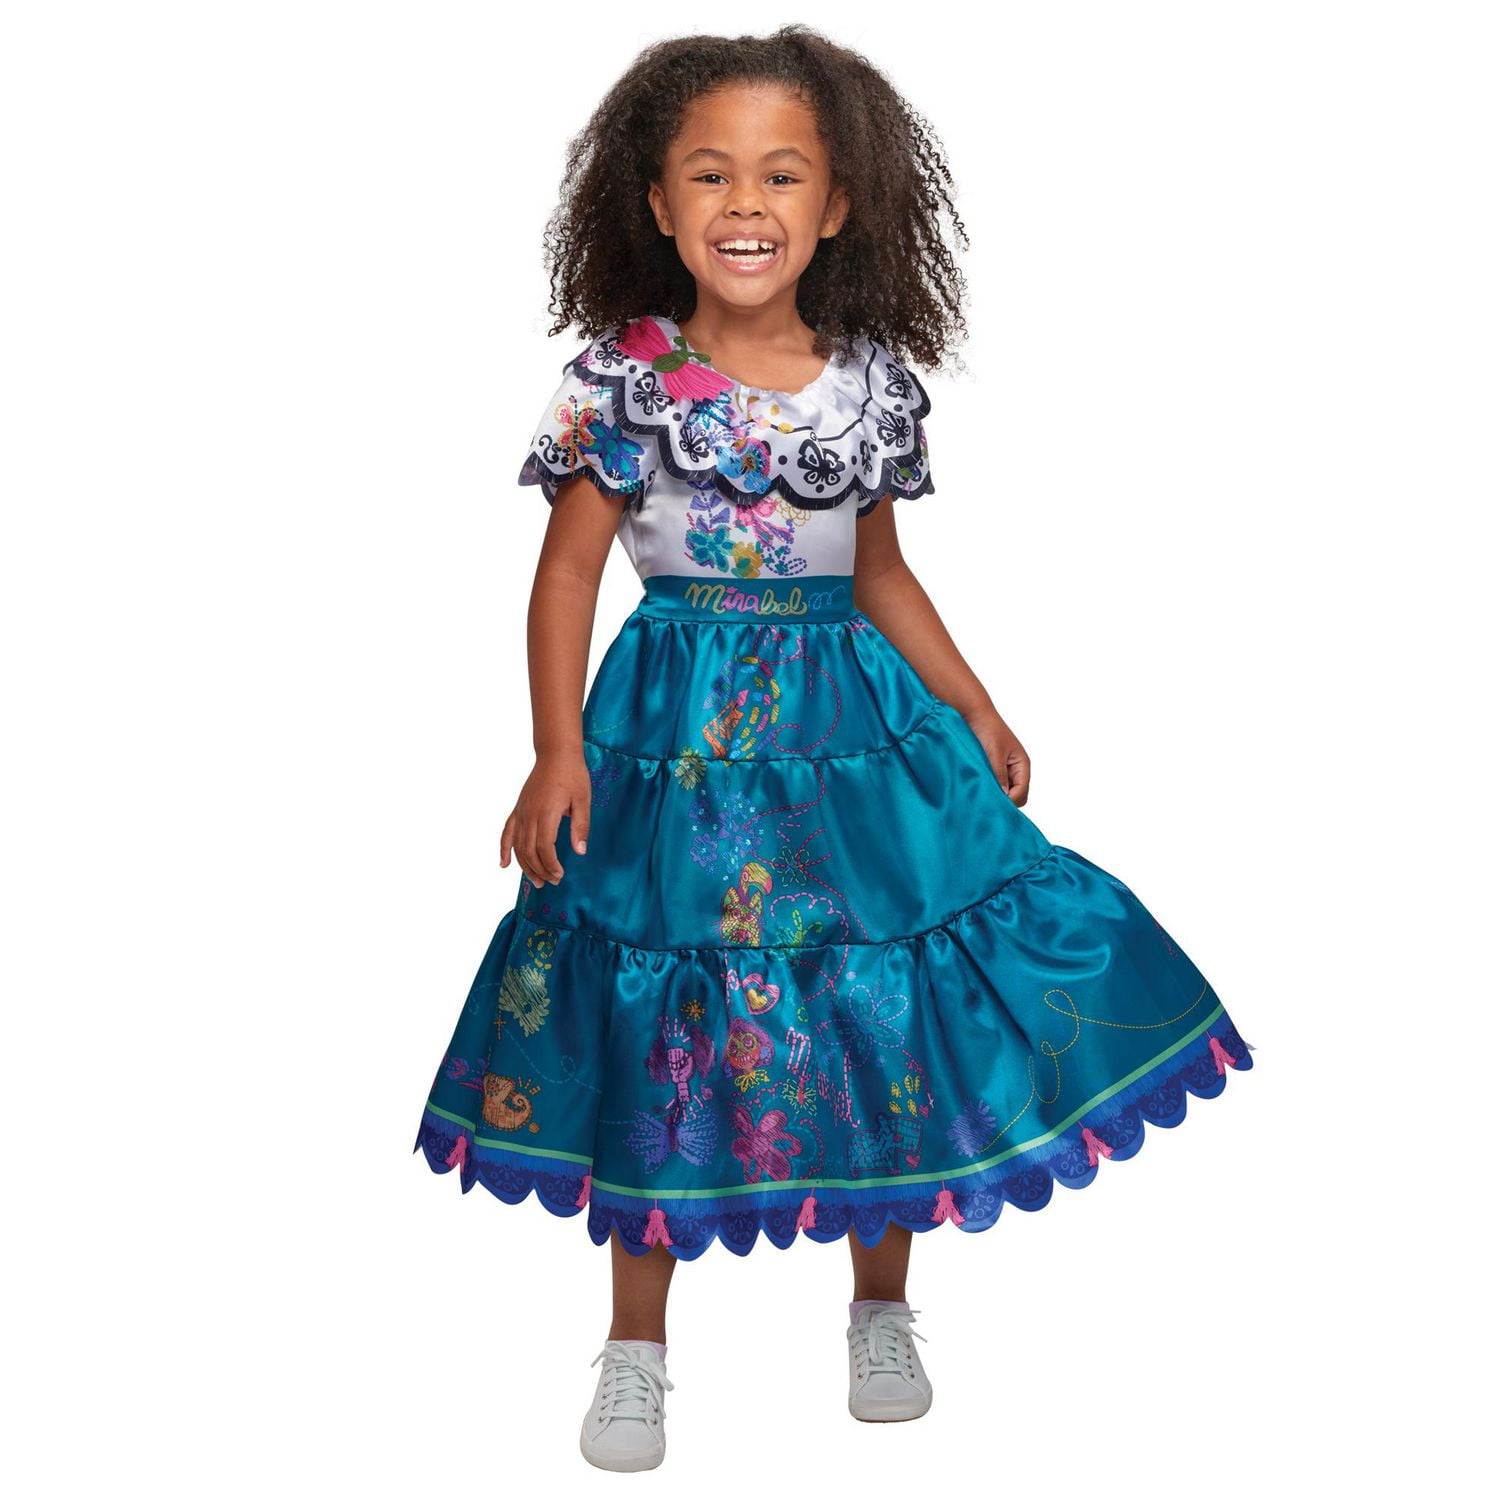 Encanto Disney Mirabel Girl's Fancy-Dress Costume, S (4-6X